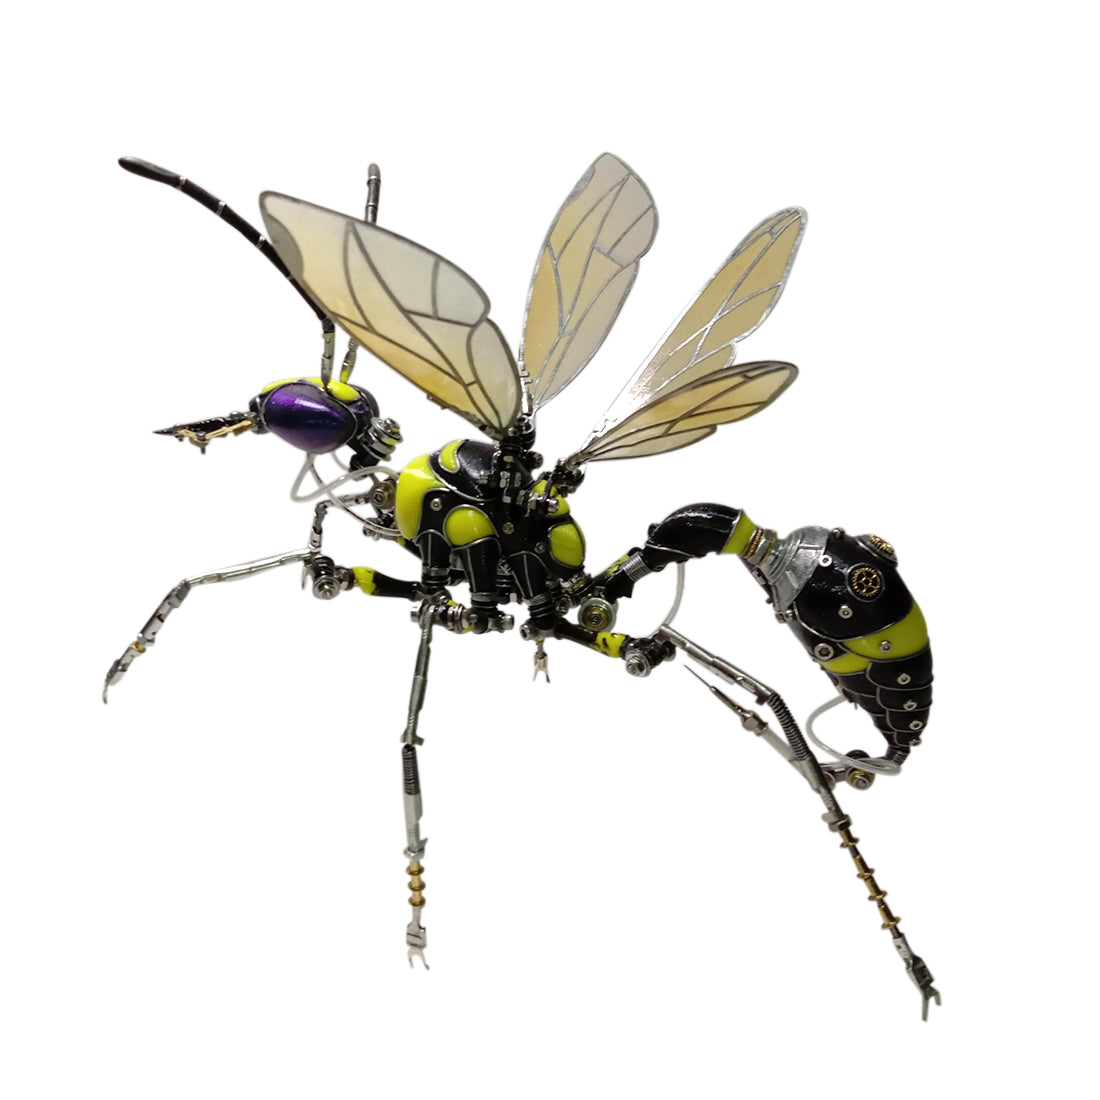 3D Assembled Steampunk Big Wasp Metal Sculpture Model Craft